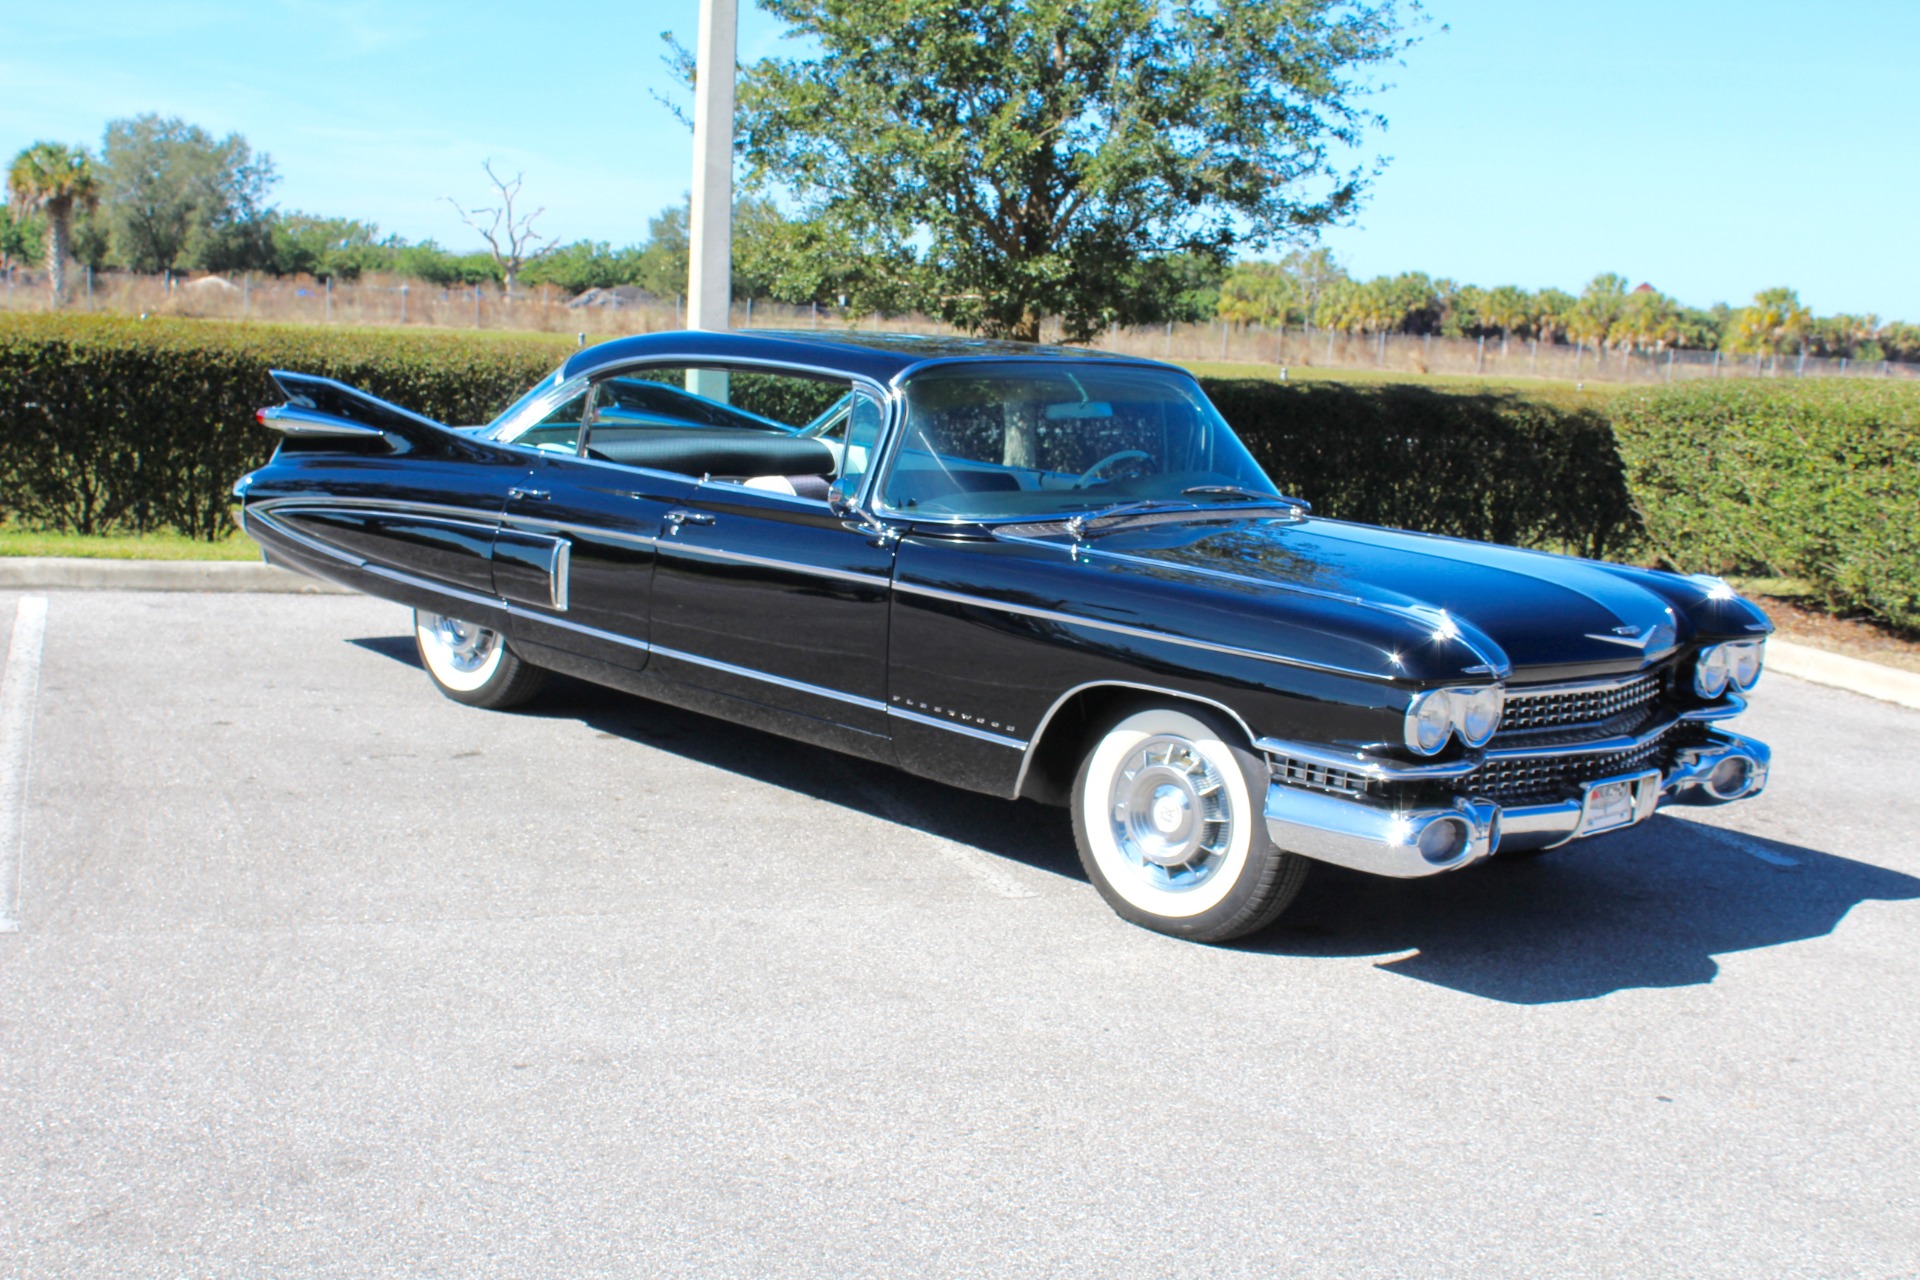 1959 Cadillac Fleetwood Hardtop Stock # 6501 for sale near Sarasota ...